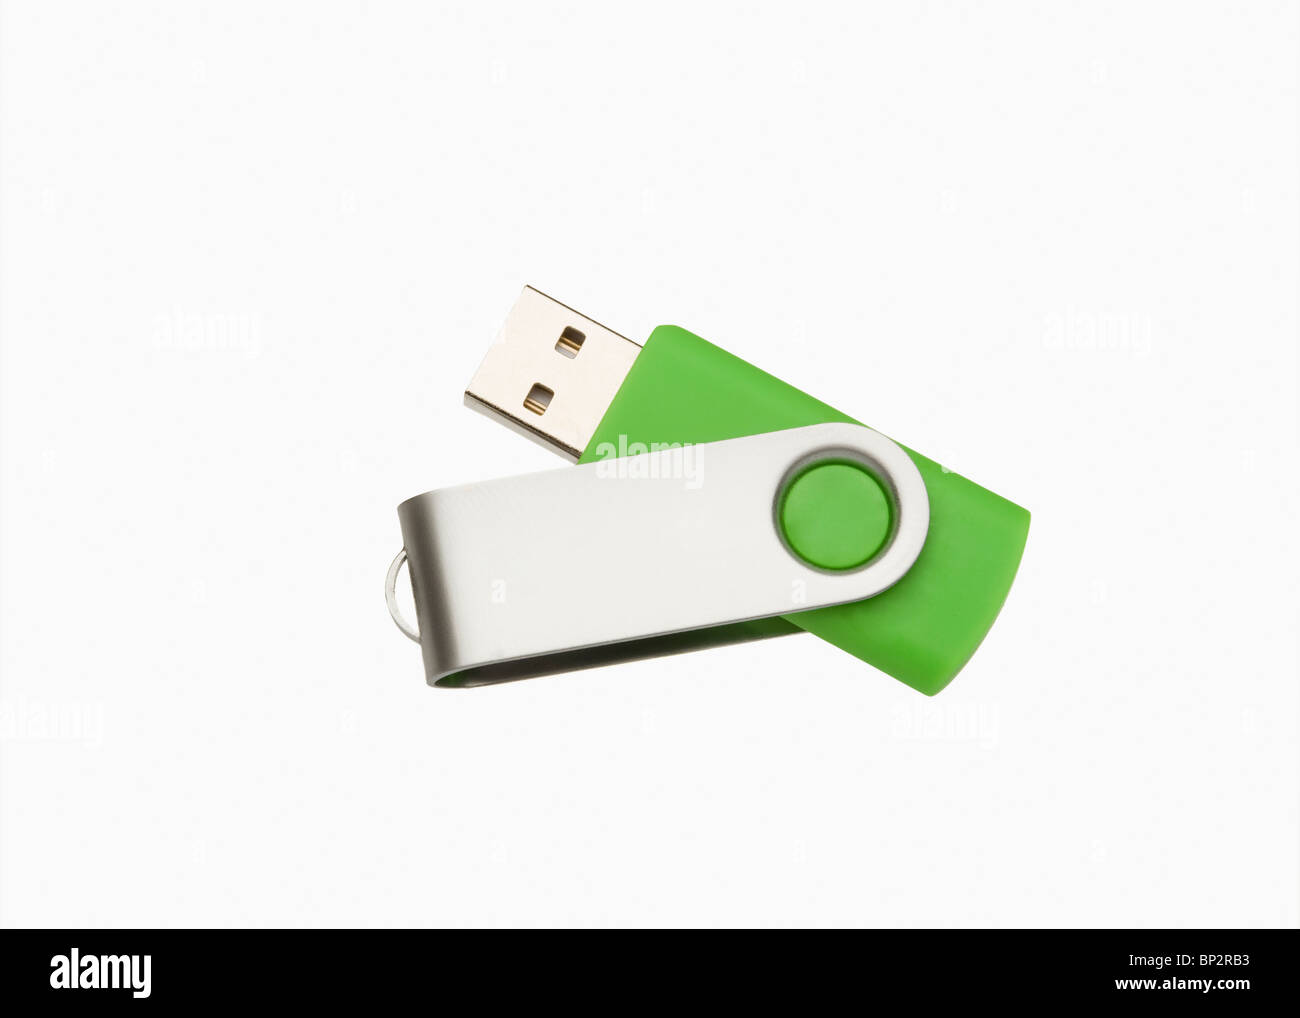 USB Swivel Flash drive Stock Photo